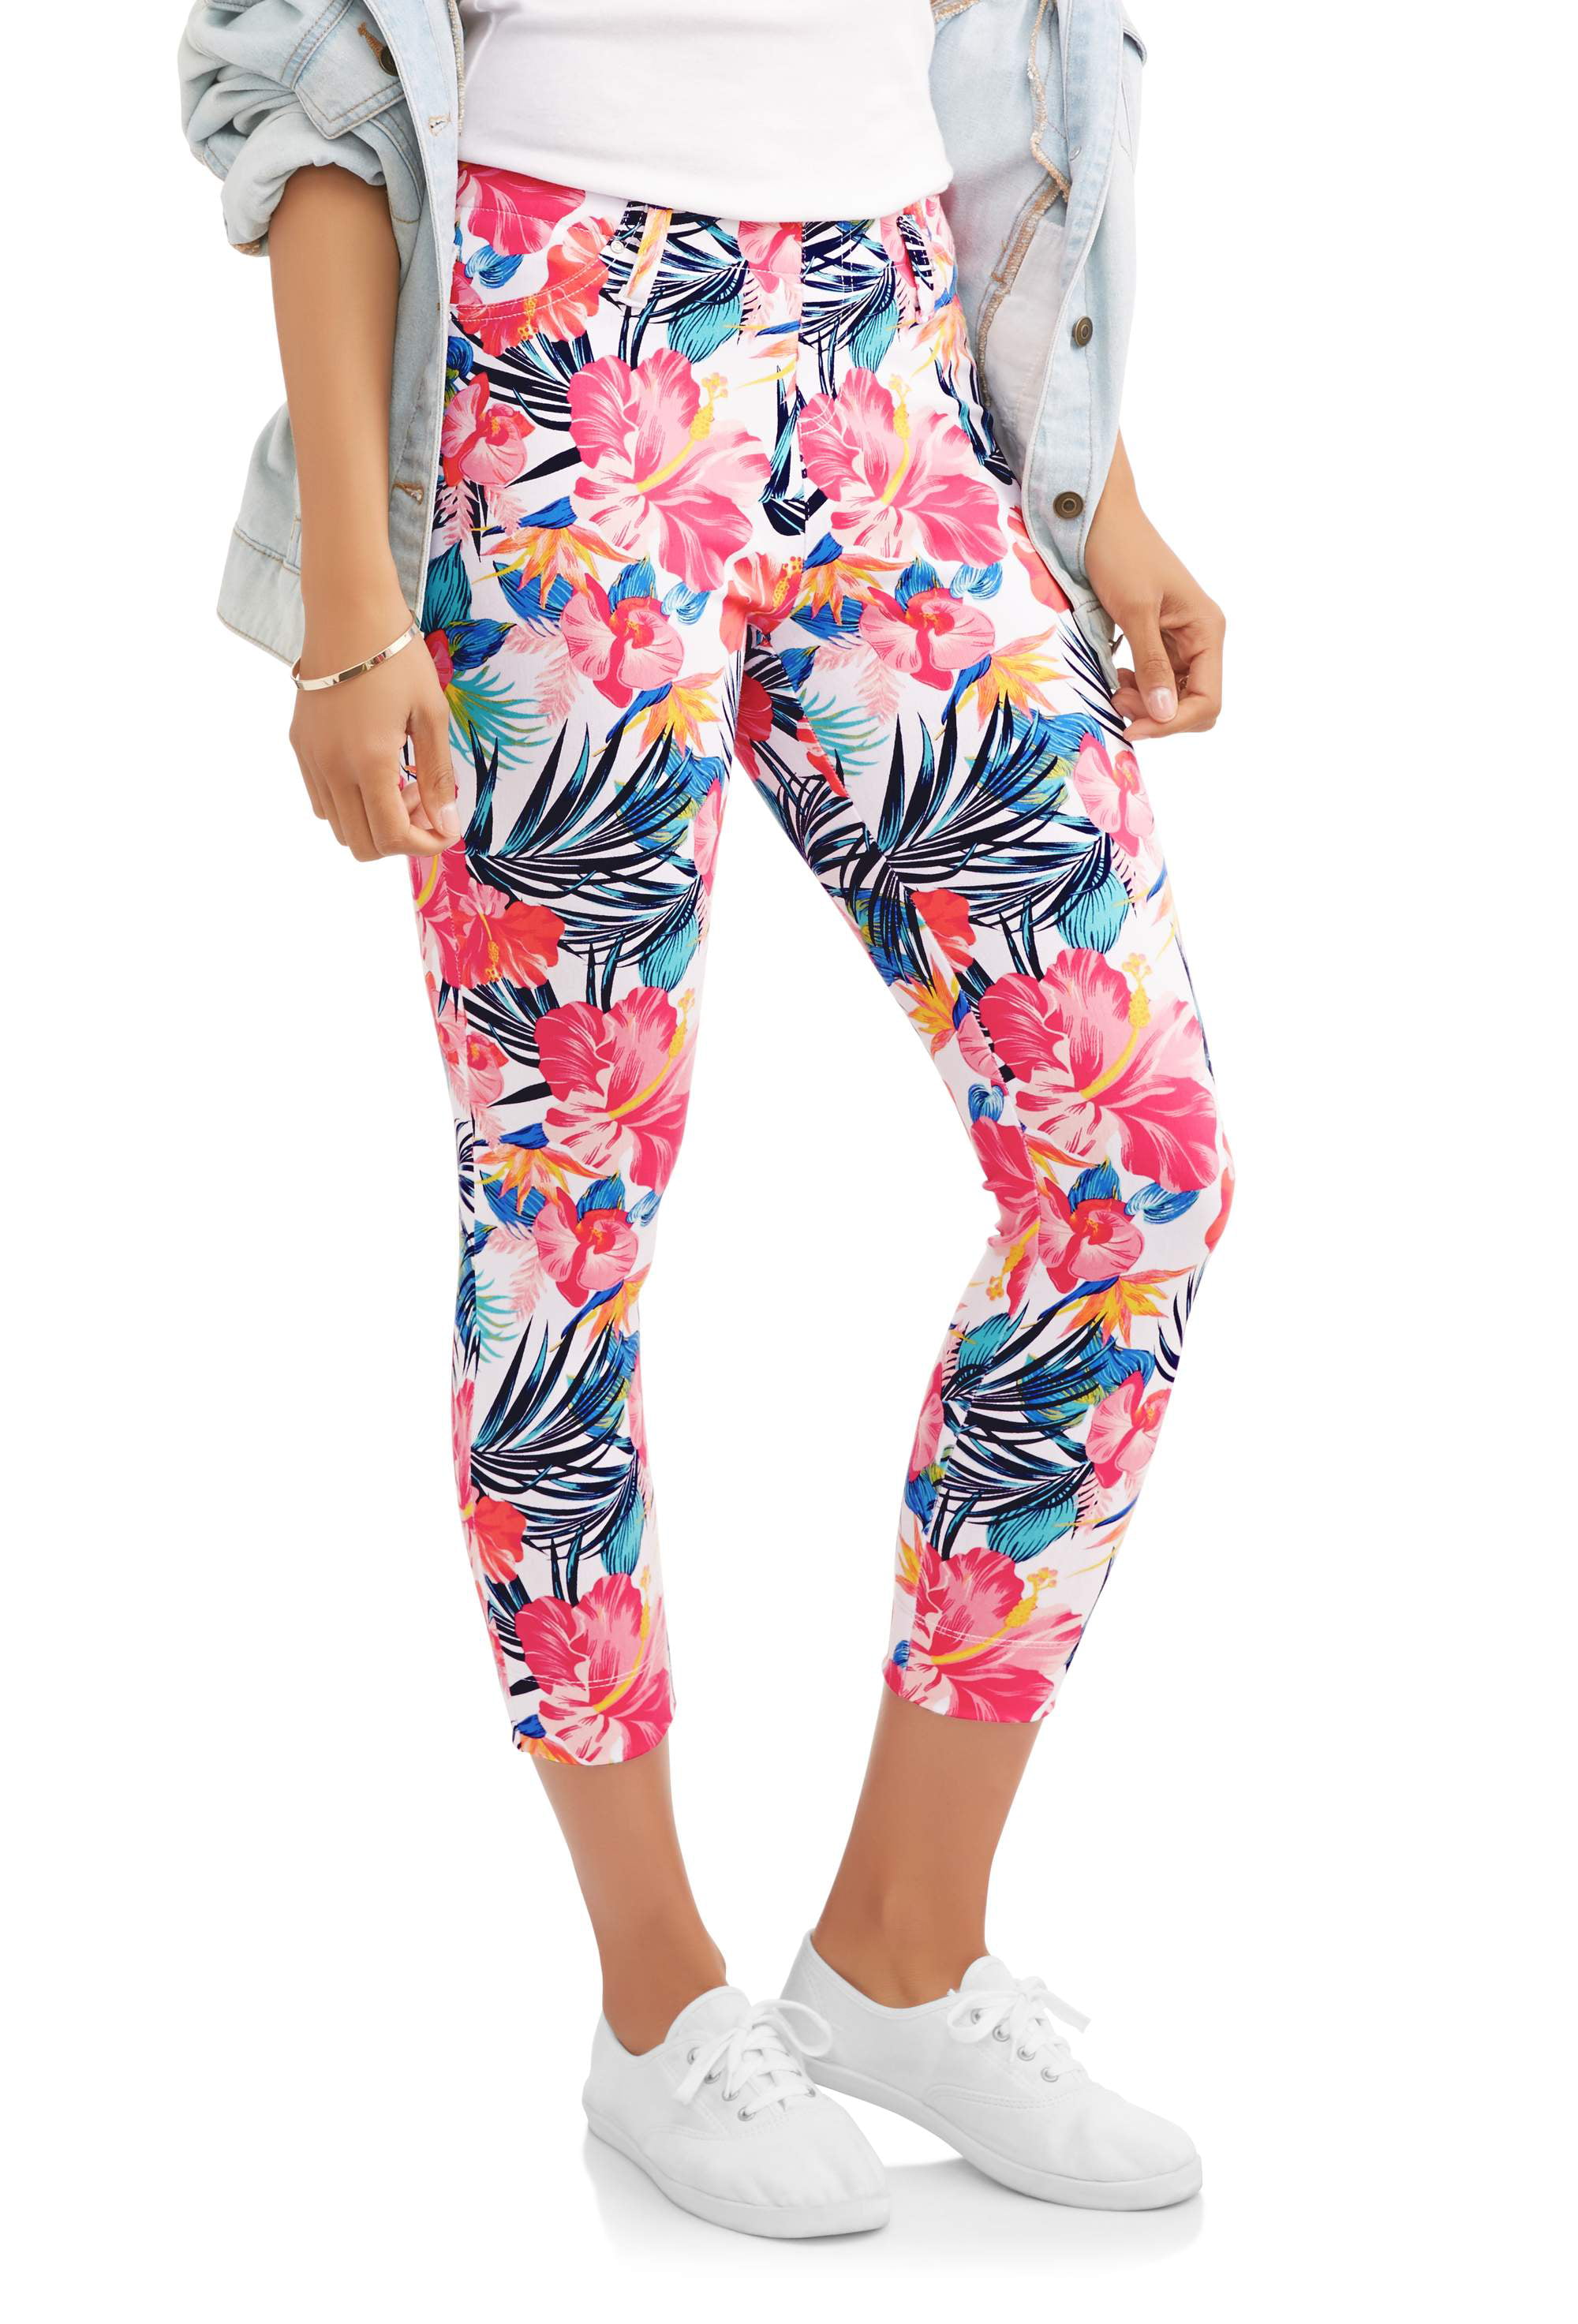 Women's Printed Jegging Capri Pants - Walmart.com